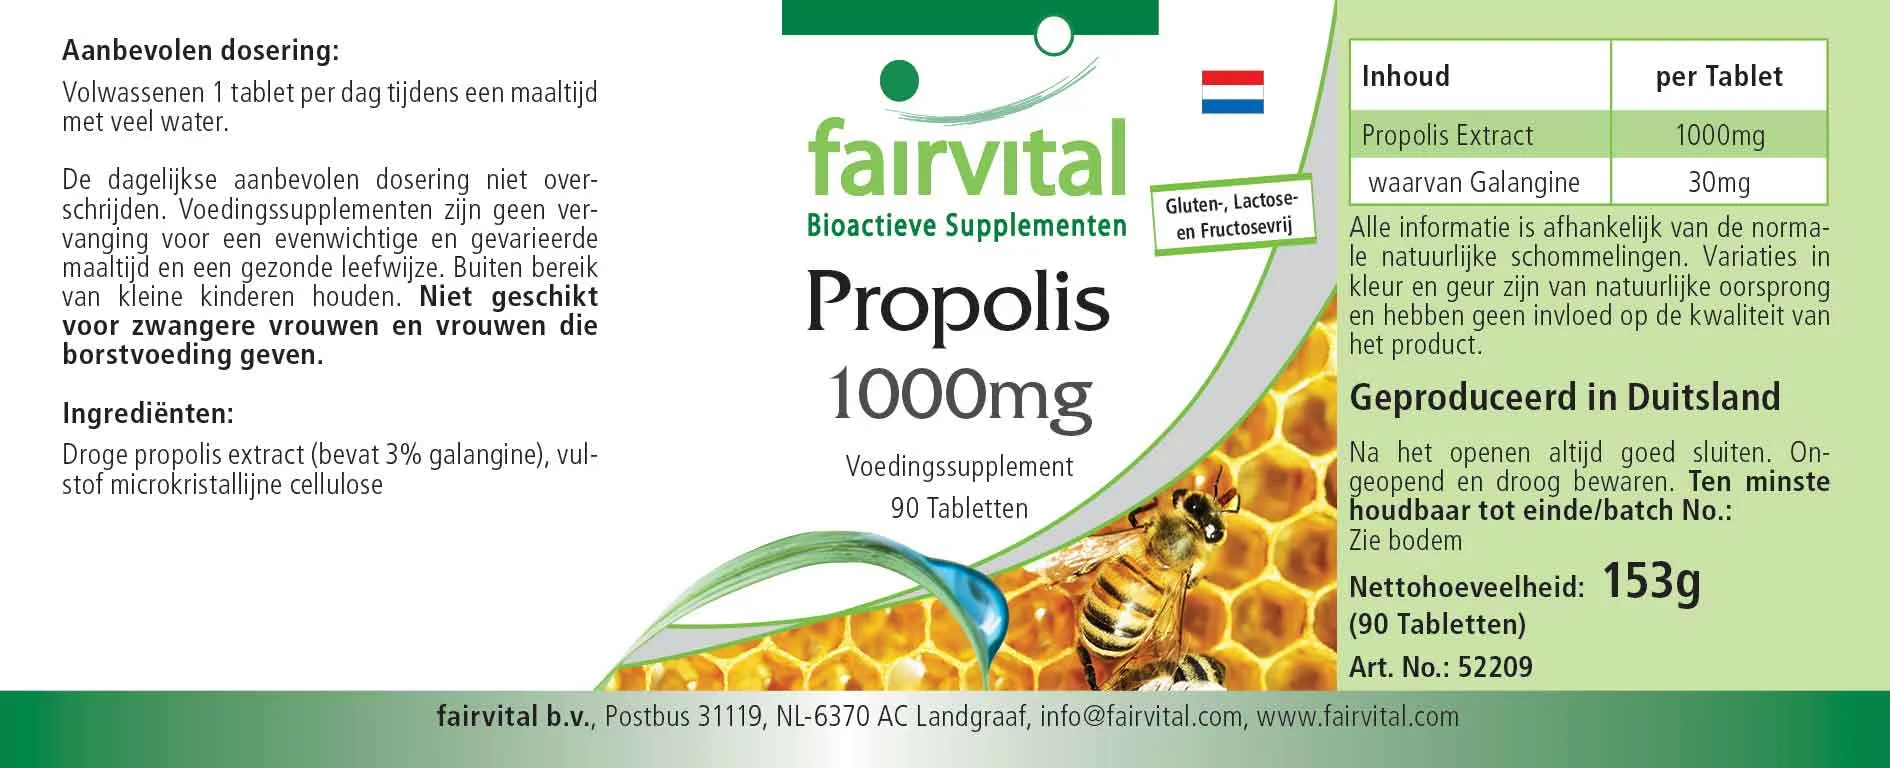 Propolis 1000mg - 90 Tablets